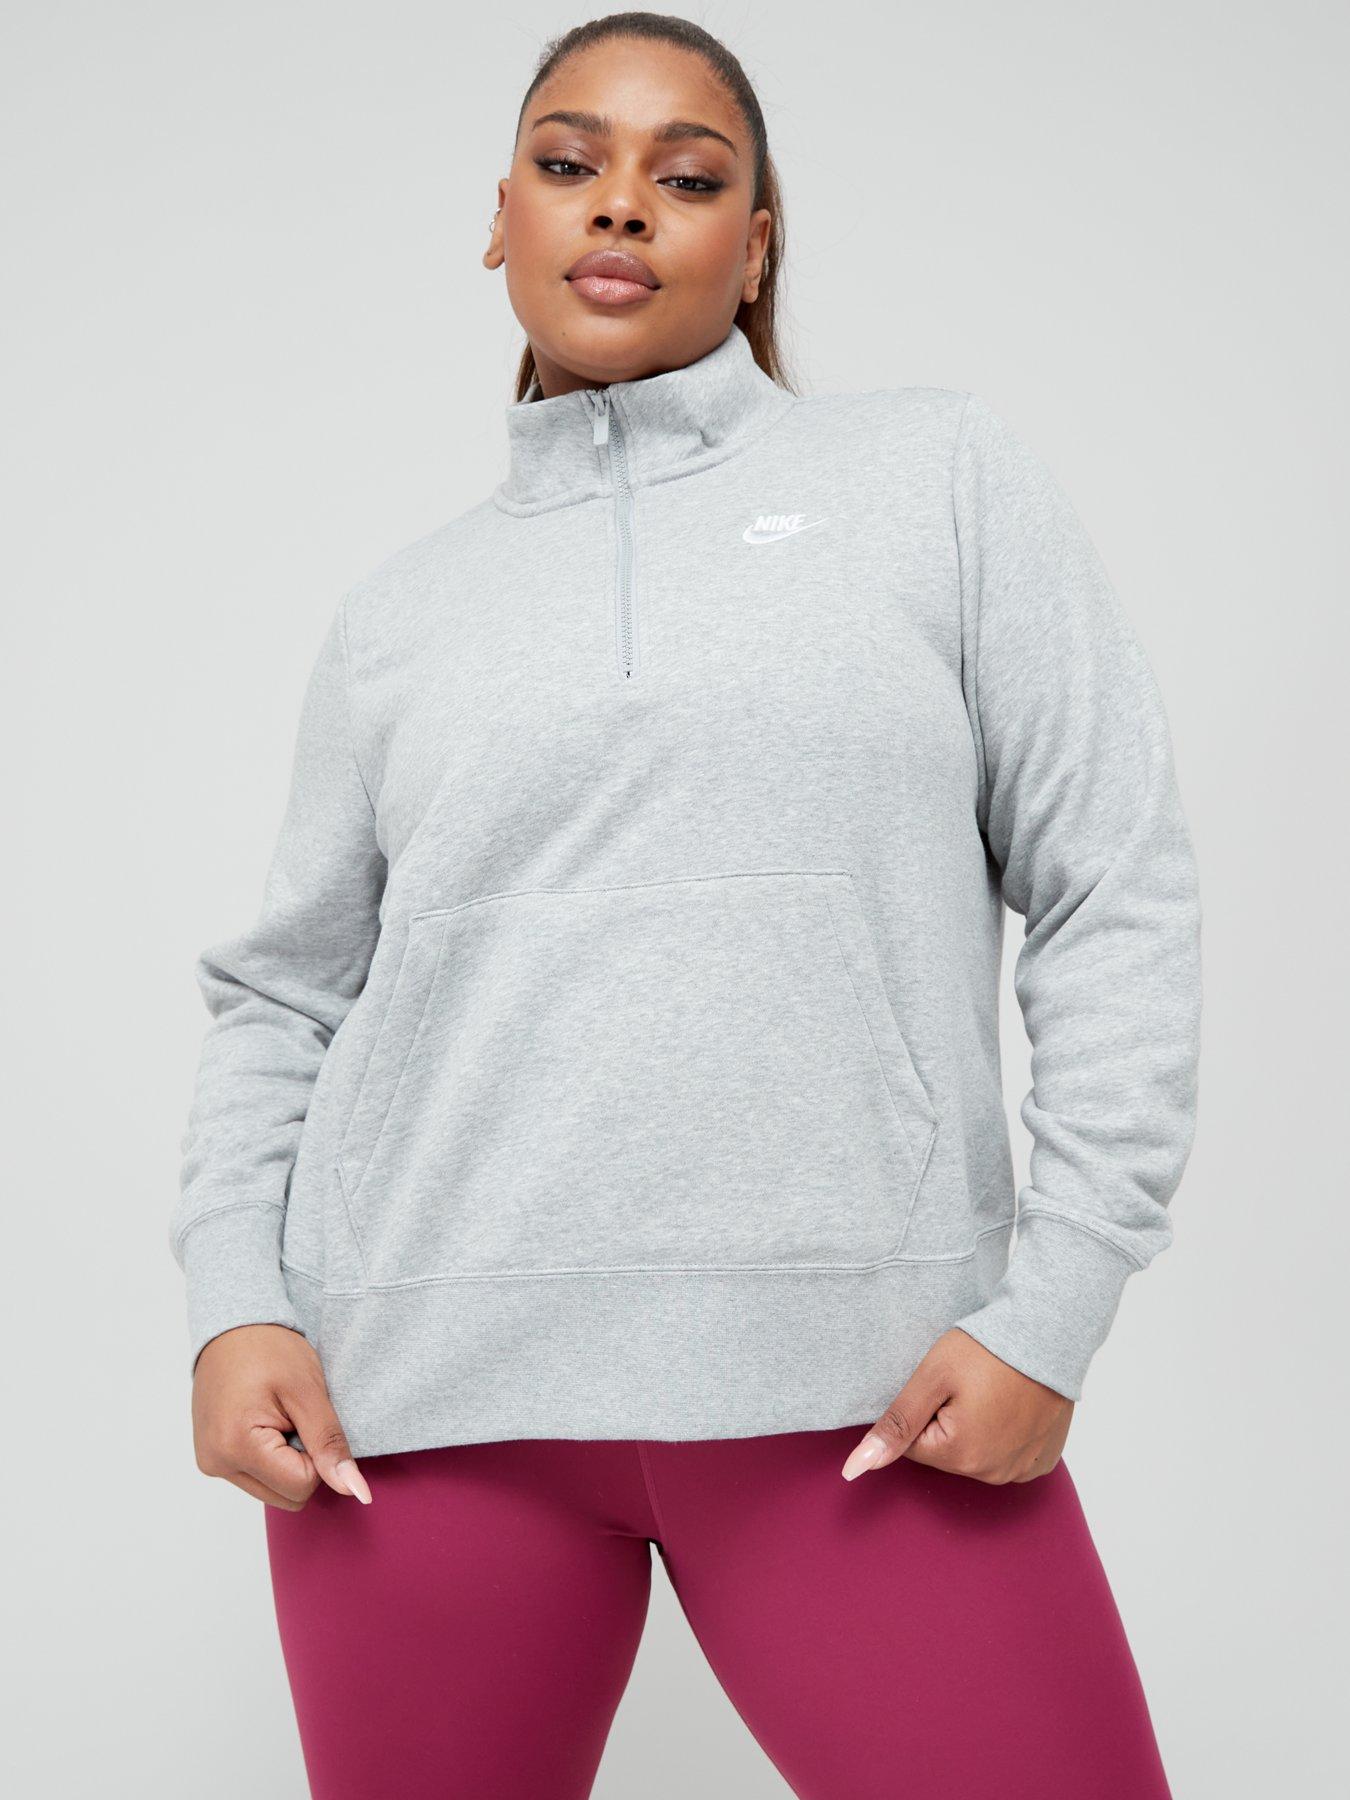 Nike Plus Size for Women | Next Day 